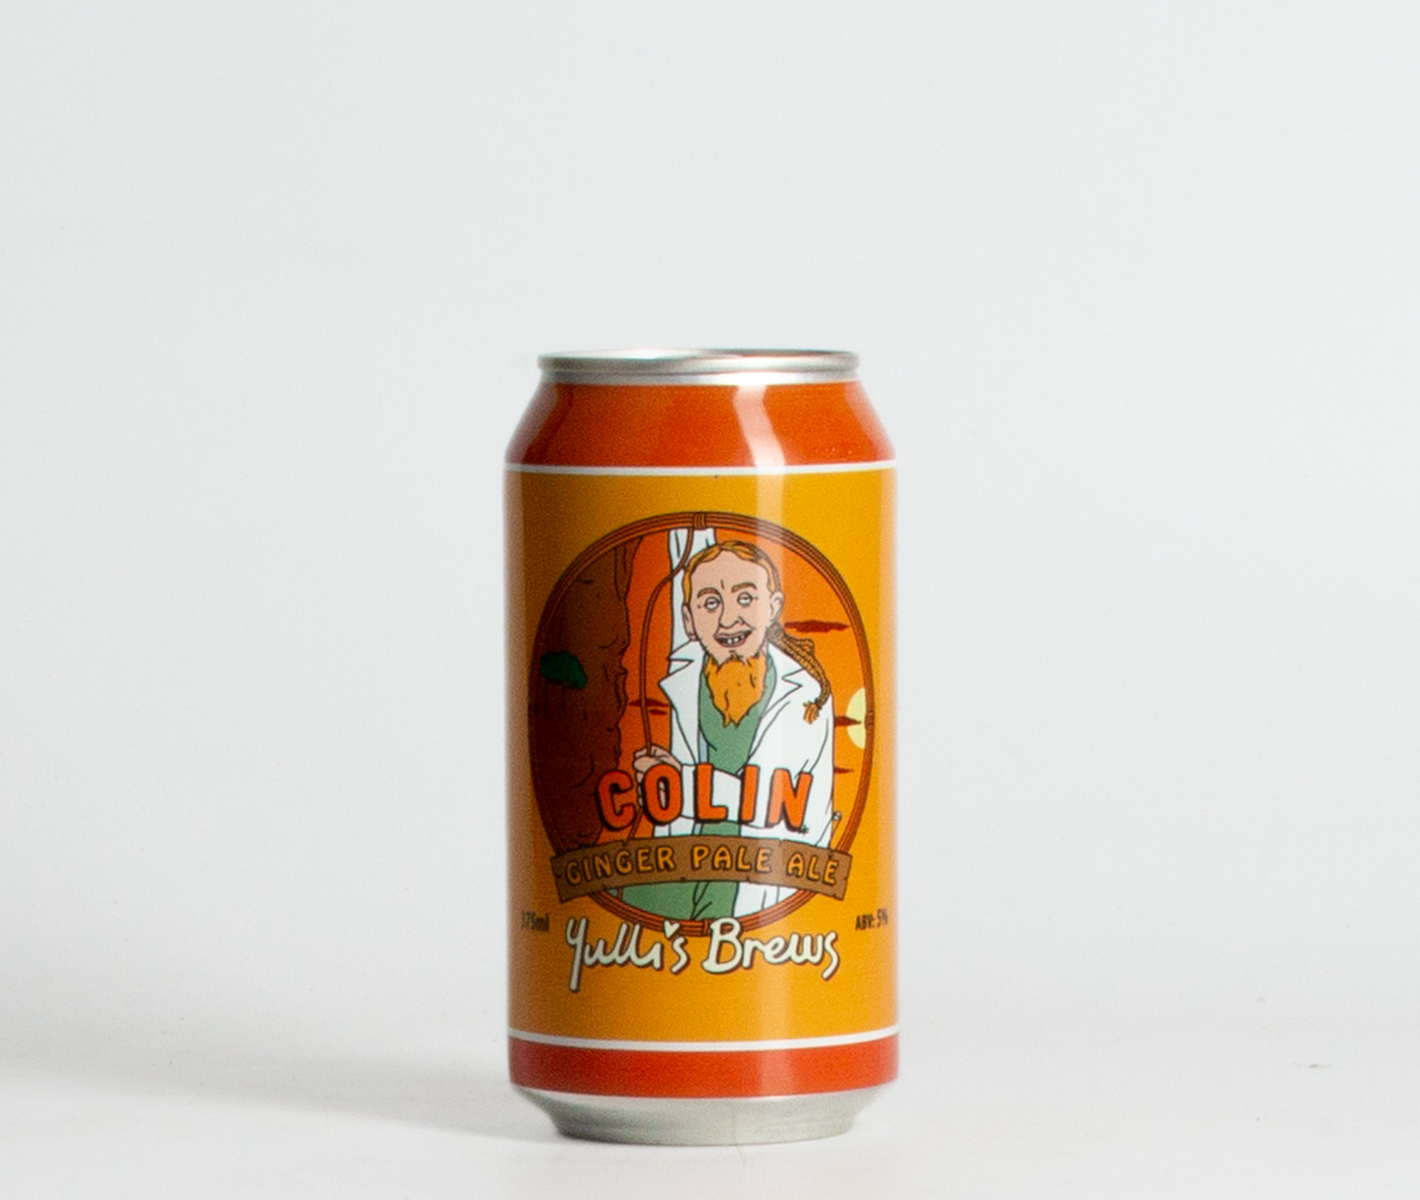 Colin Ginger Pale Ale (375ml)